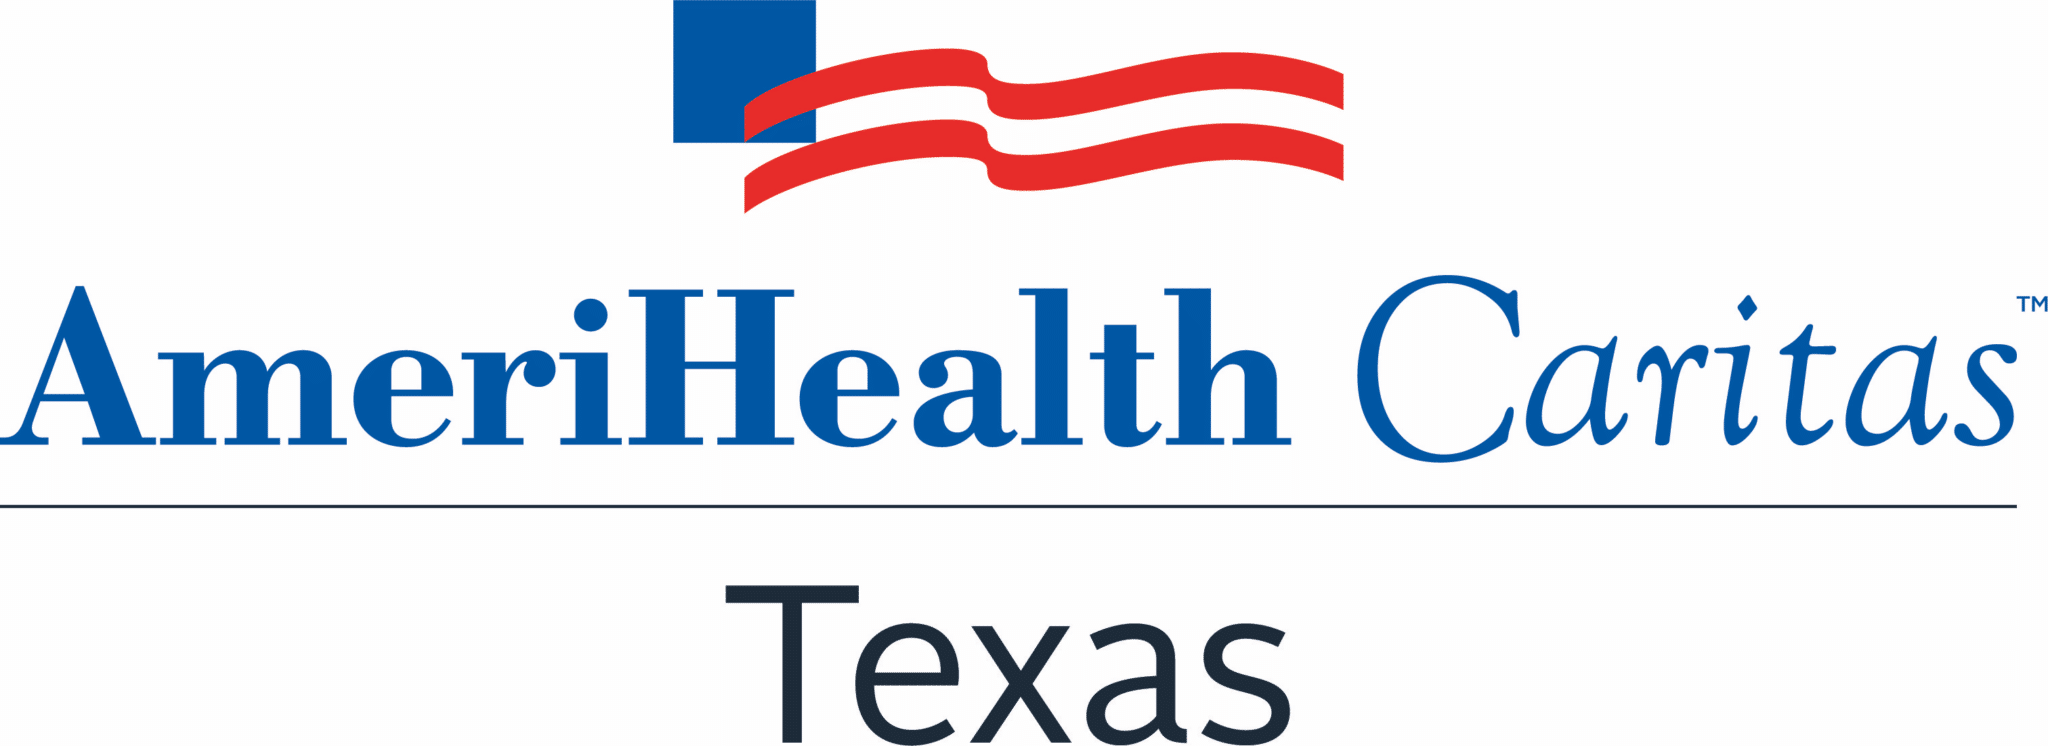 Amerihealth Caritas Texas Logo